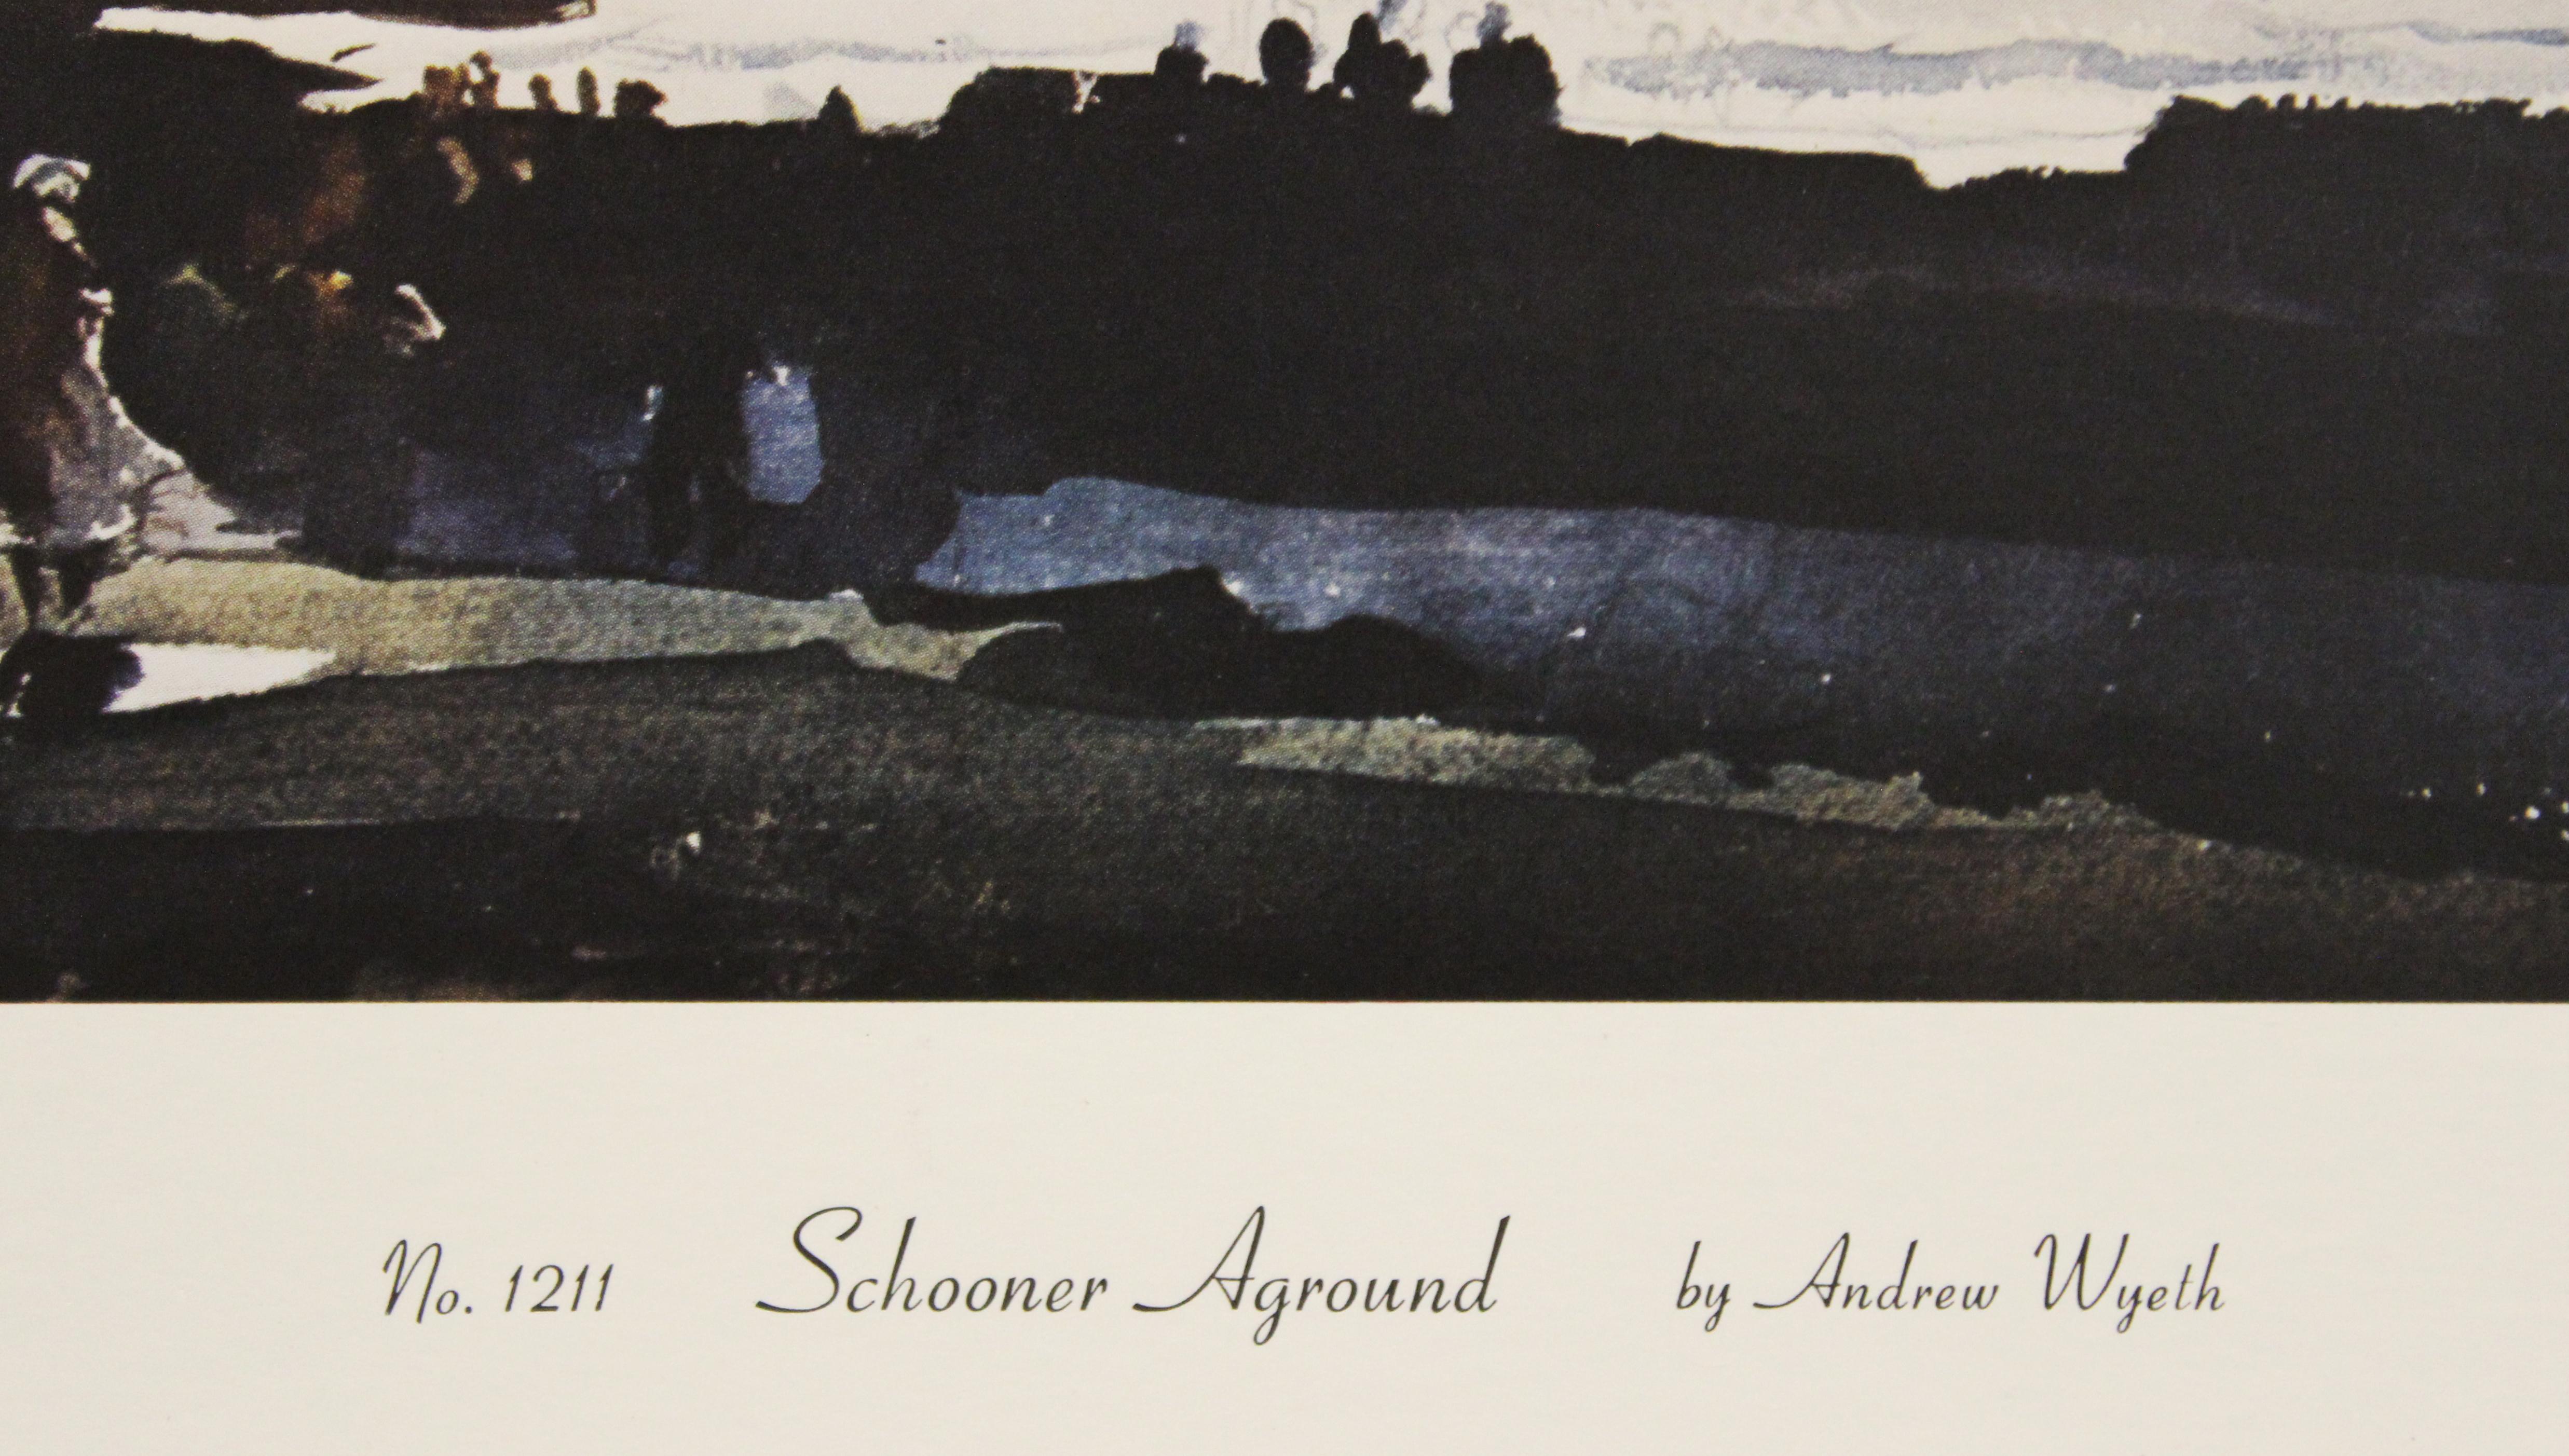 Schooner-Poster „Aground“. Copyright Aaron Ashley, Inc. (Grau), Landscape Print, von (after) Andrew Wyeth